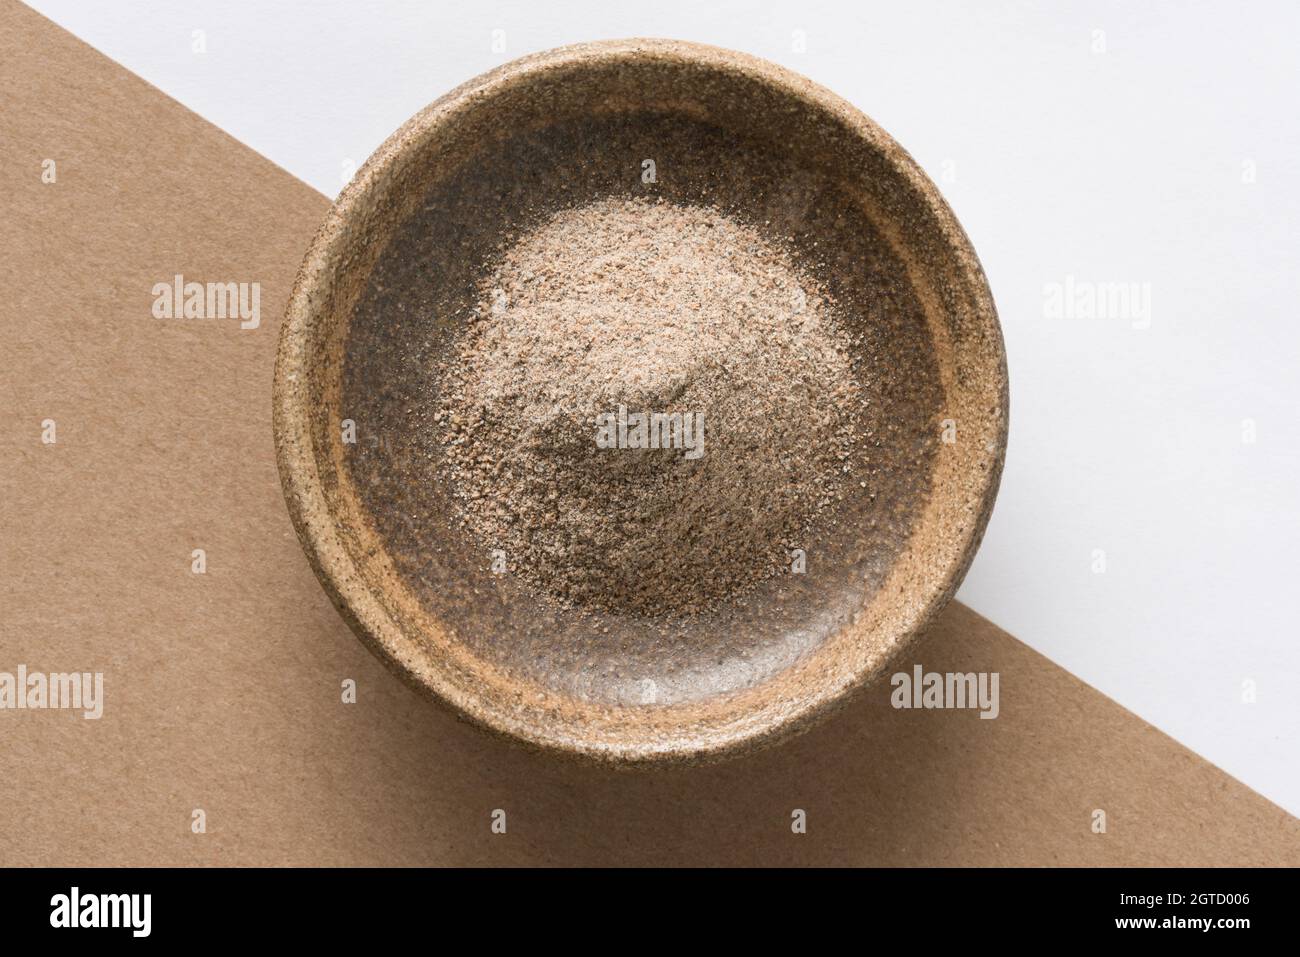 Ground Cardamom In A Bowl Stock Photo